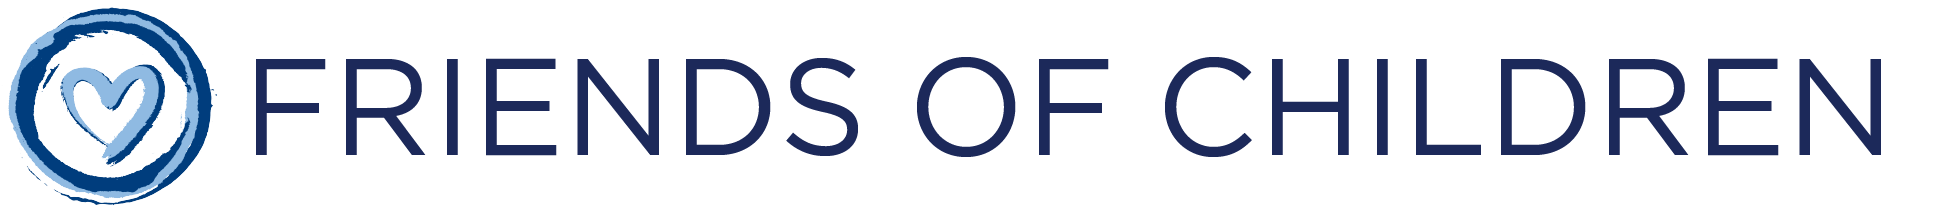 FOC horizontal logo